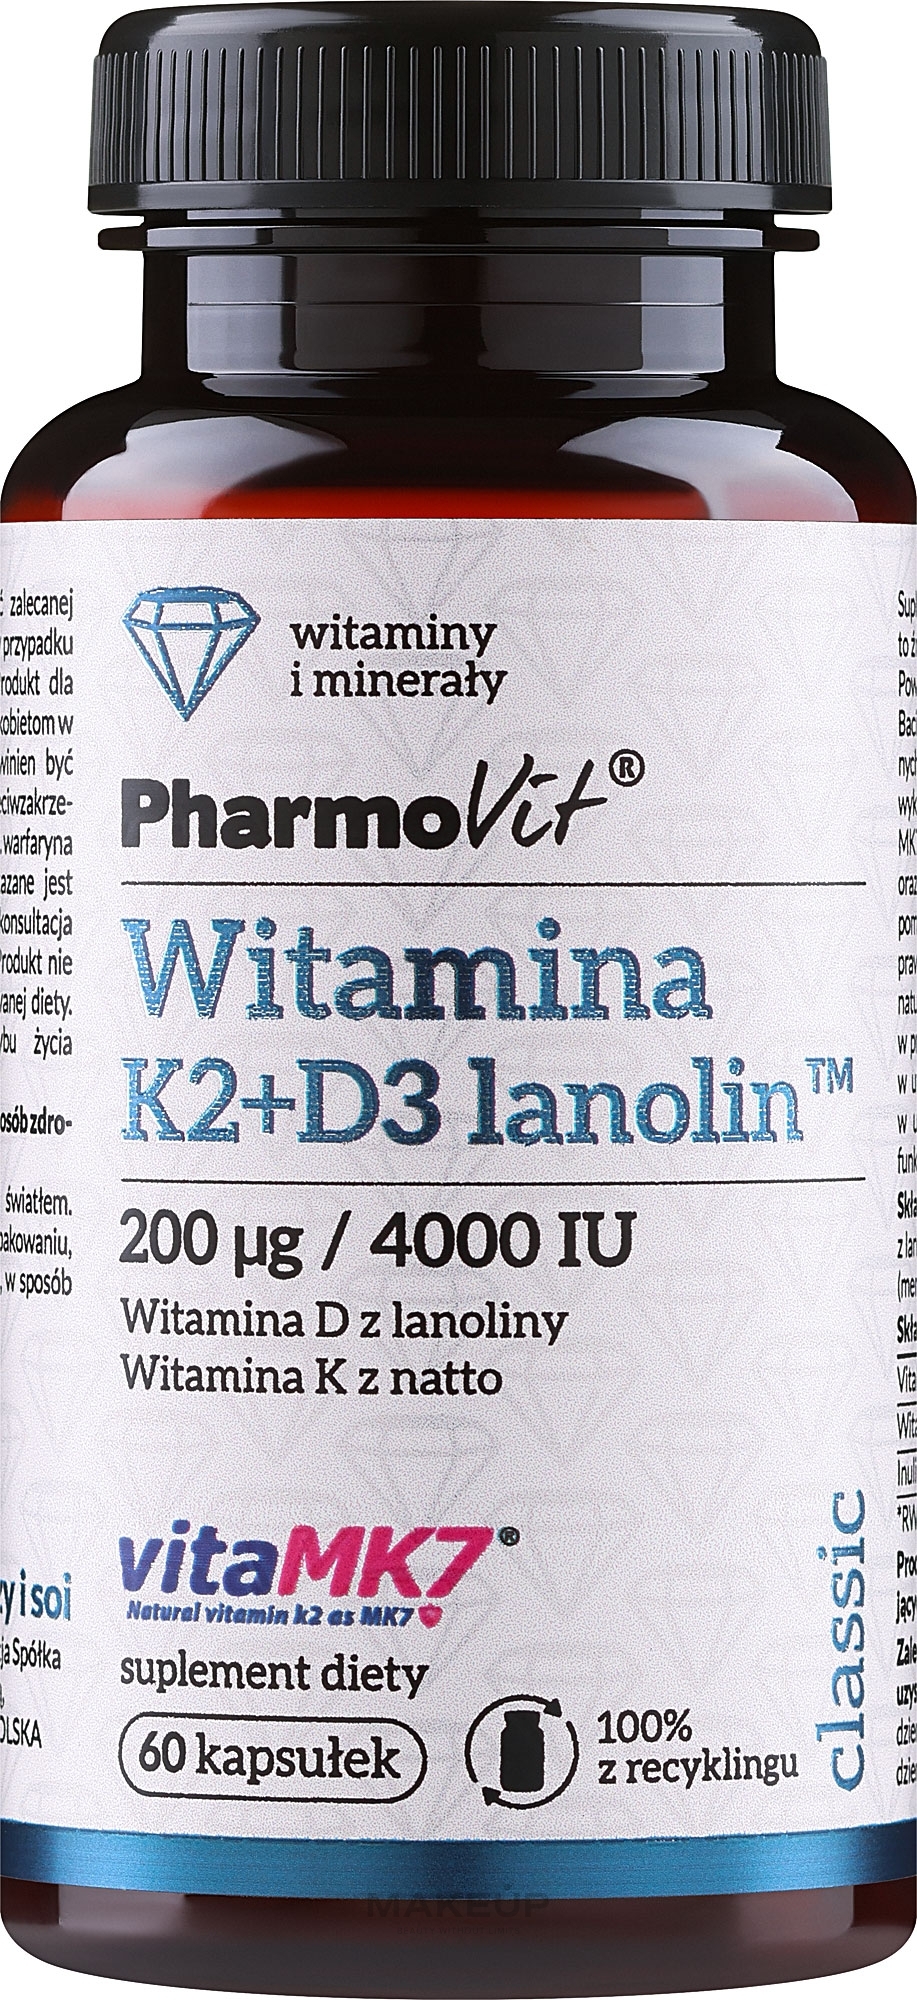 Dietary Supplement "Vitamins K2 + D3" - PharmoVit Classic Vitamin K2 + D3 Lanolin — photo 60 szt.